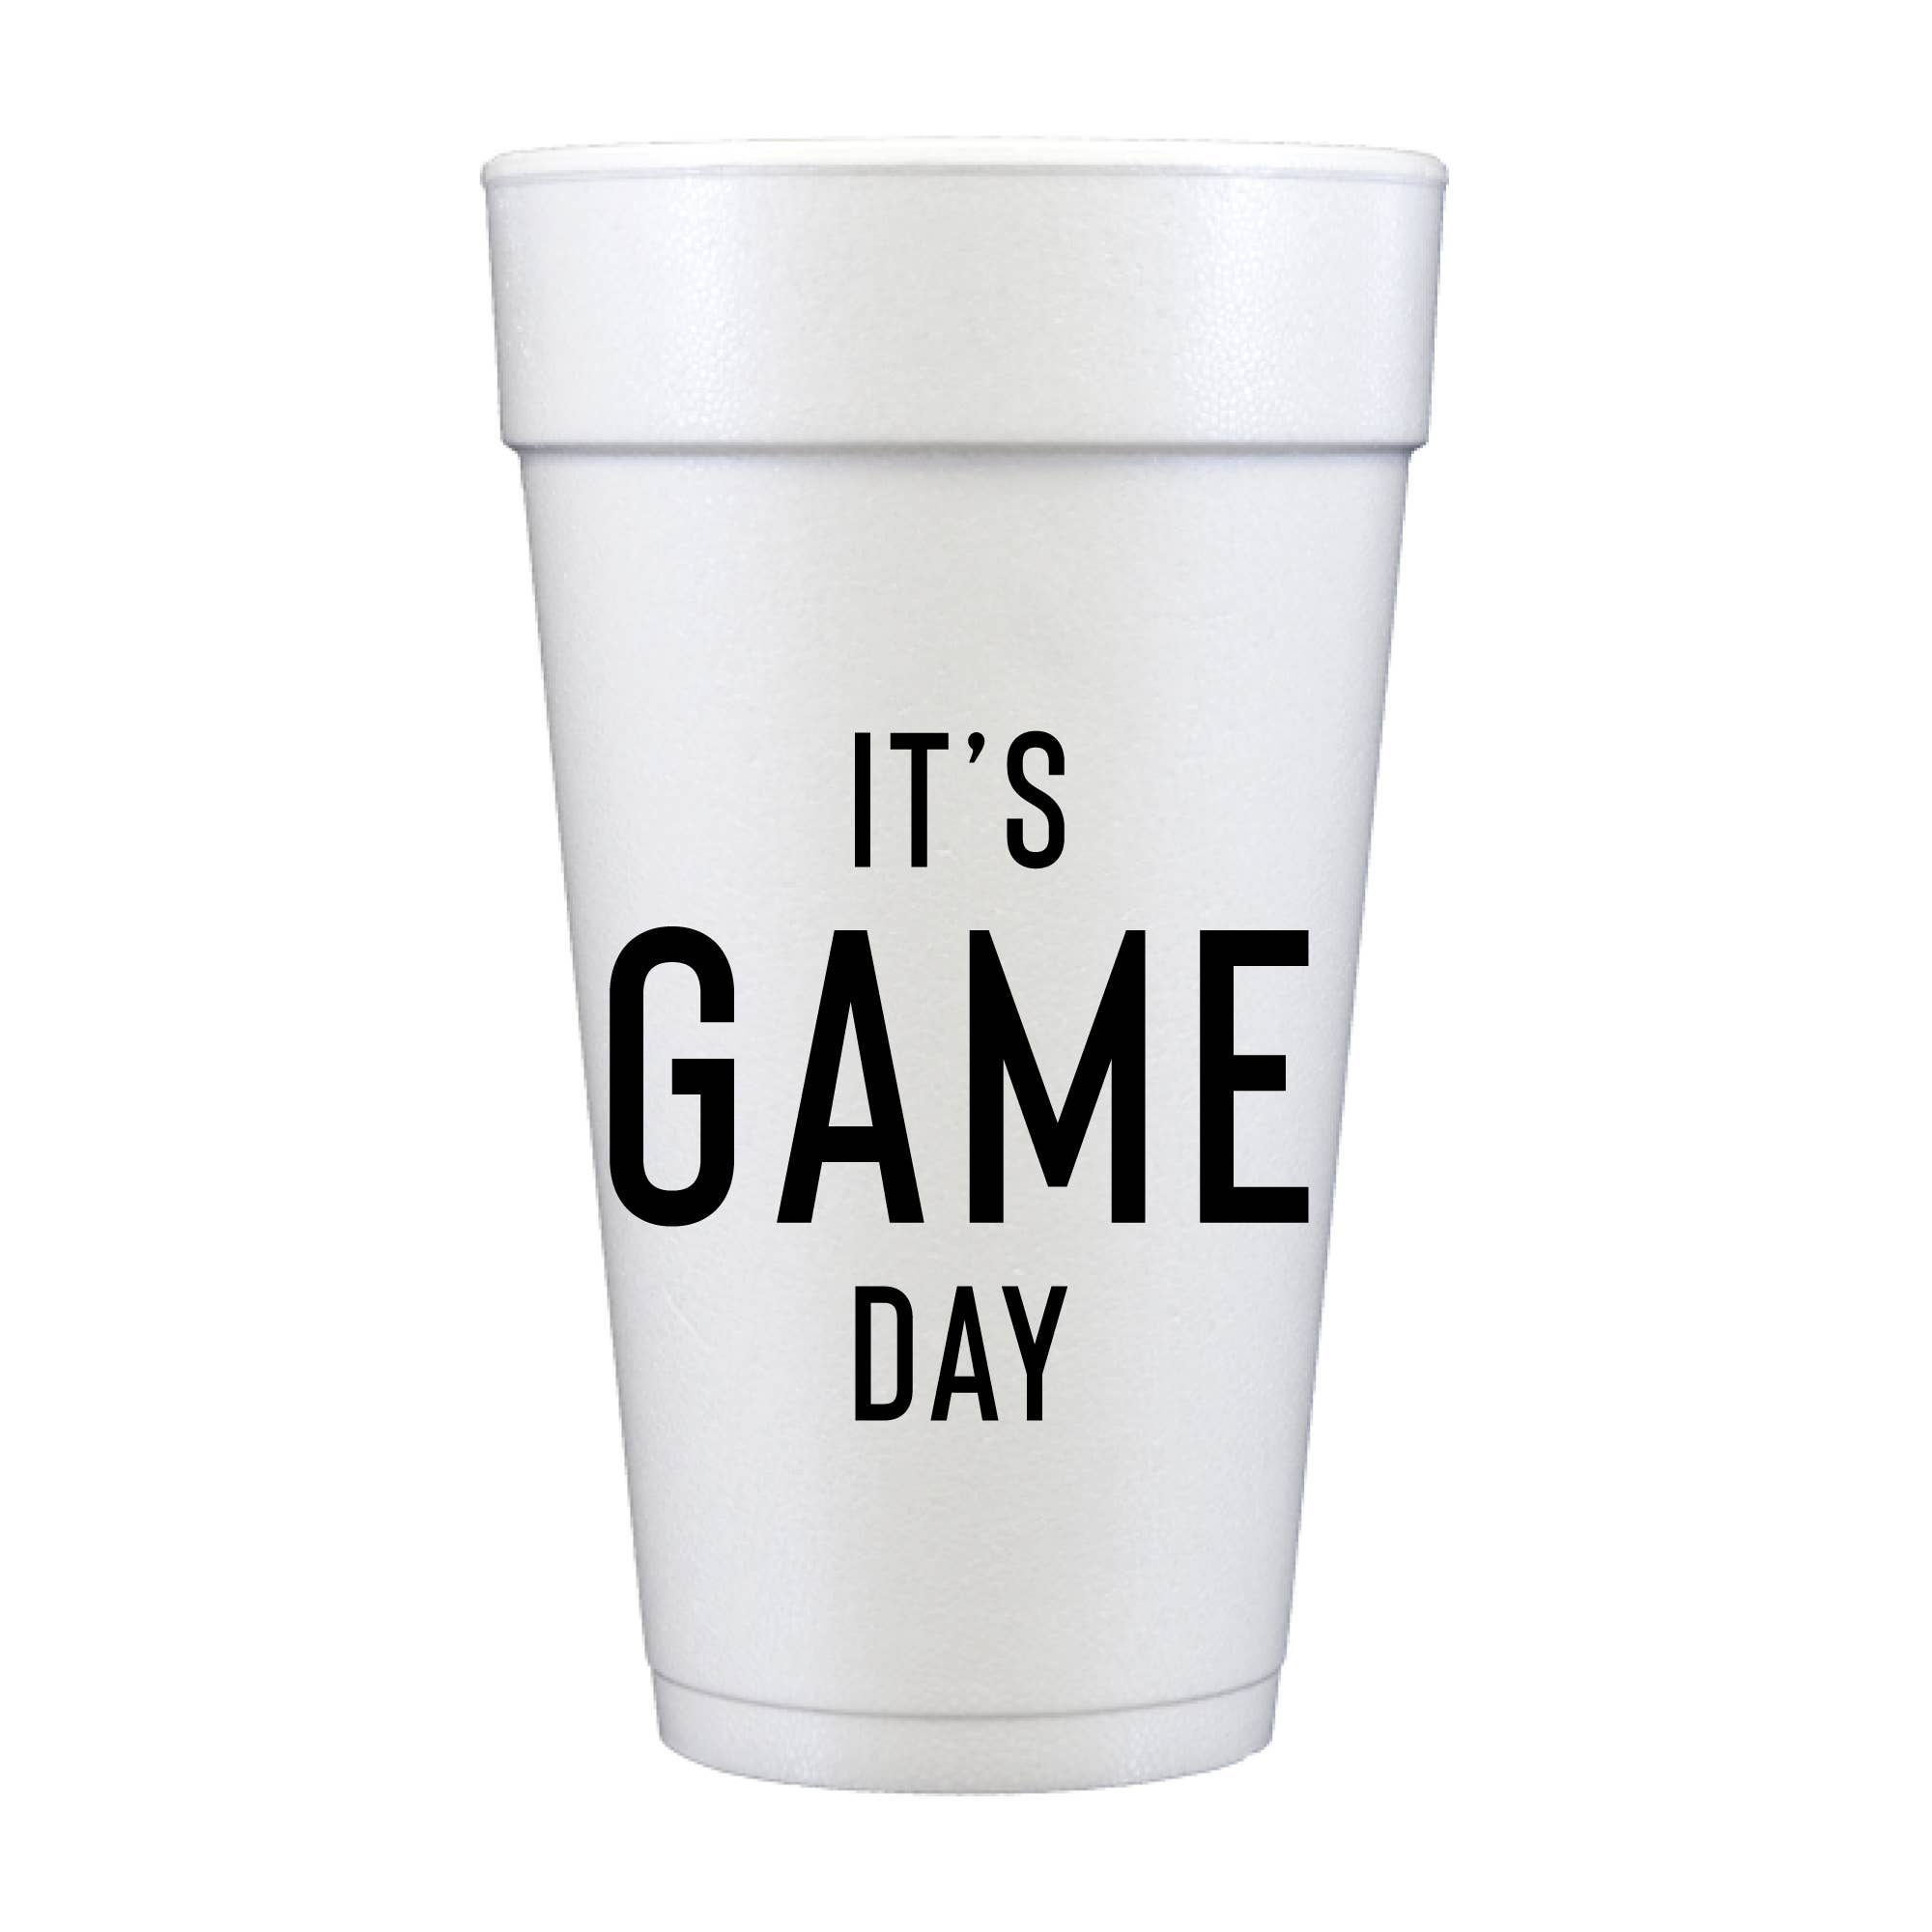 It's Game Day - Foam Cups S/10